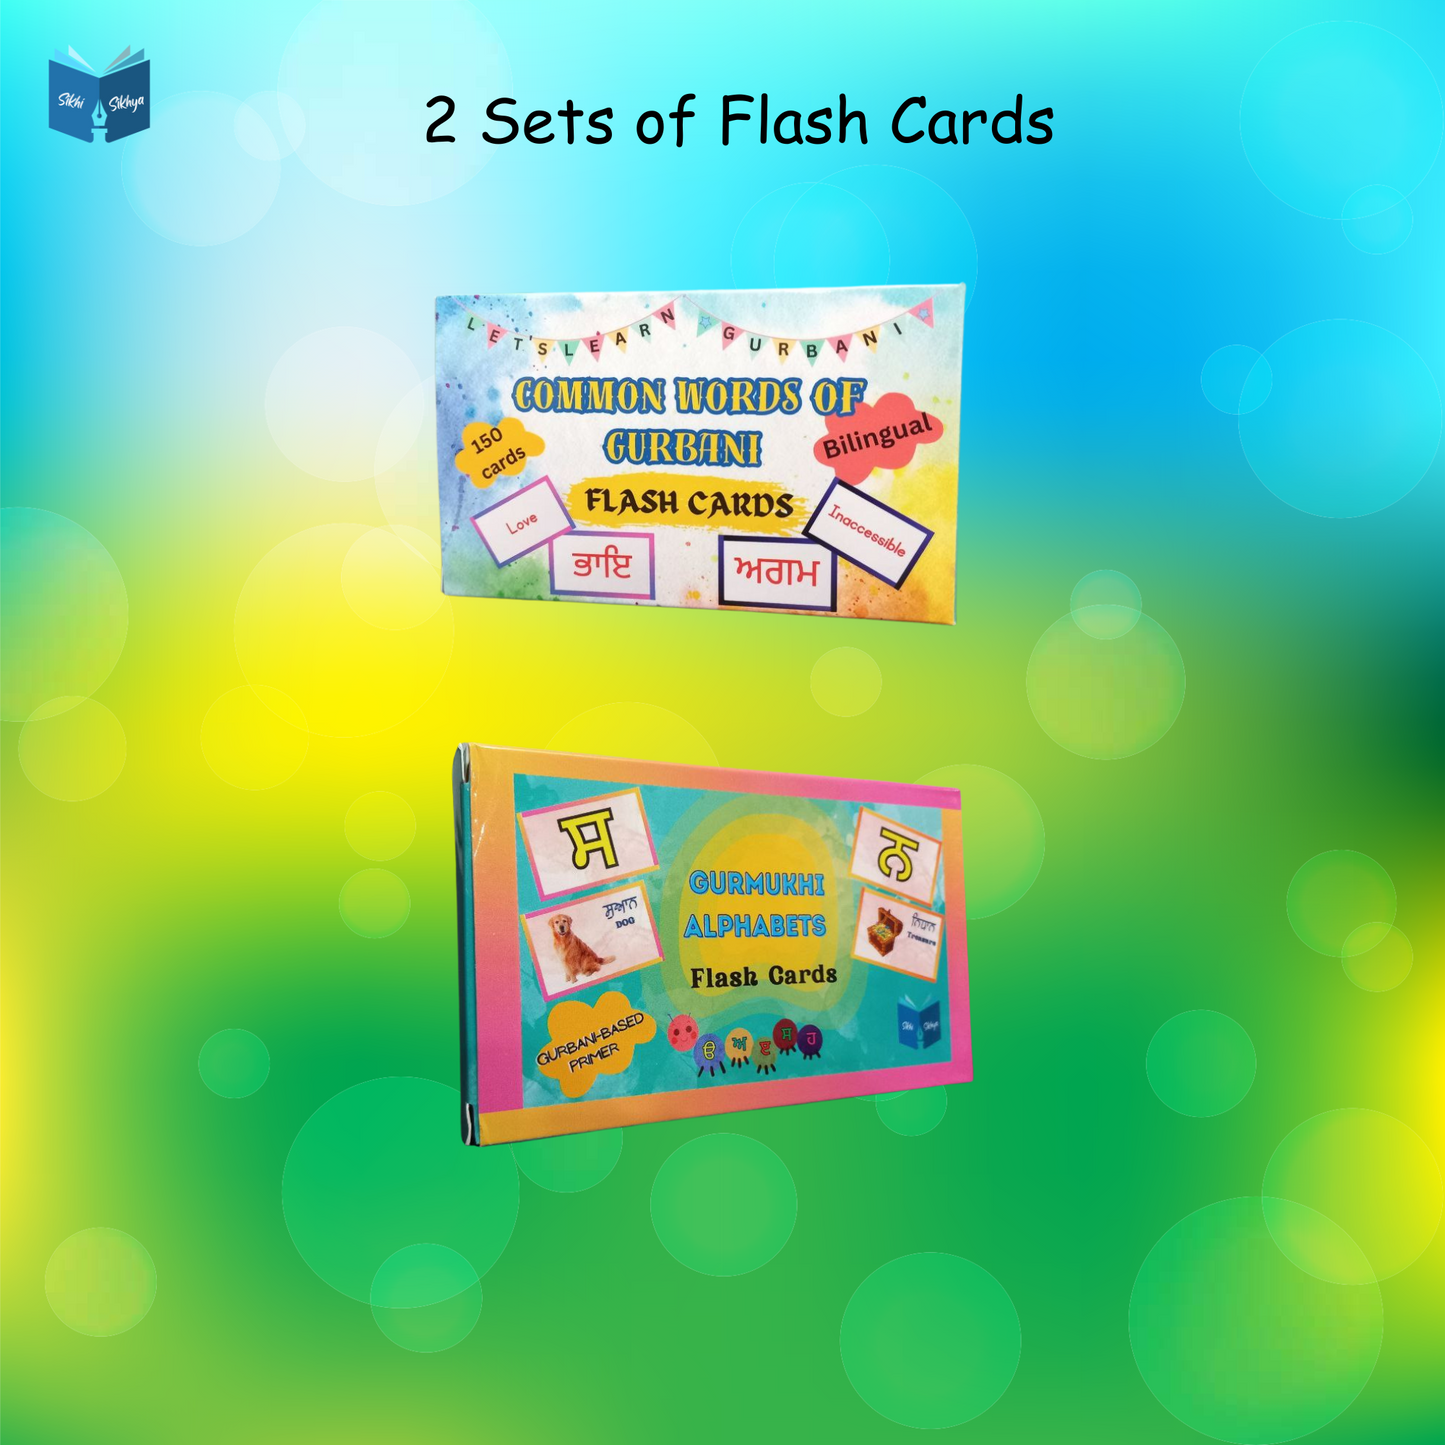 Gurmukhi Flash Cards - 2 Sets of Flash Cards